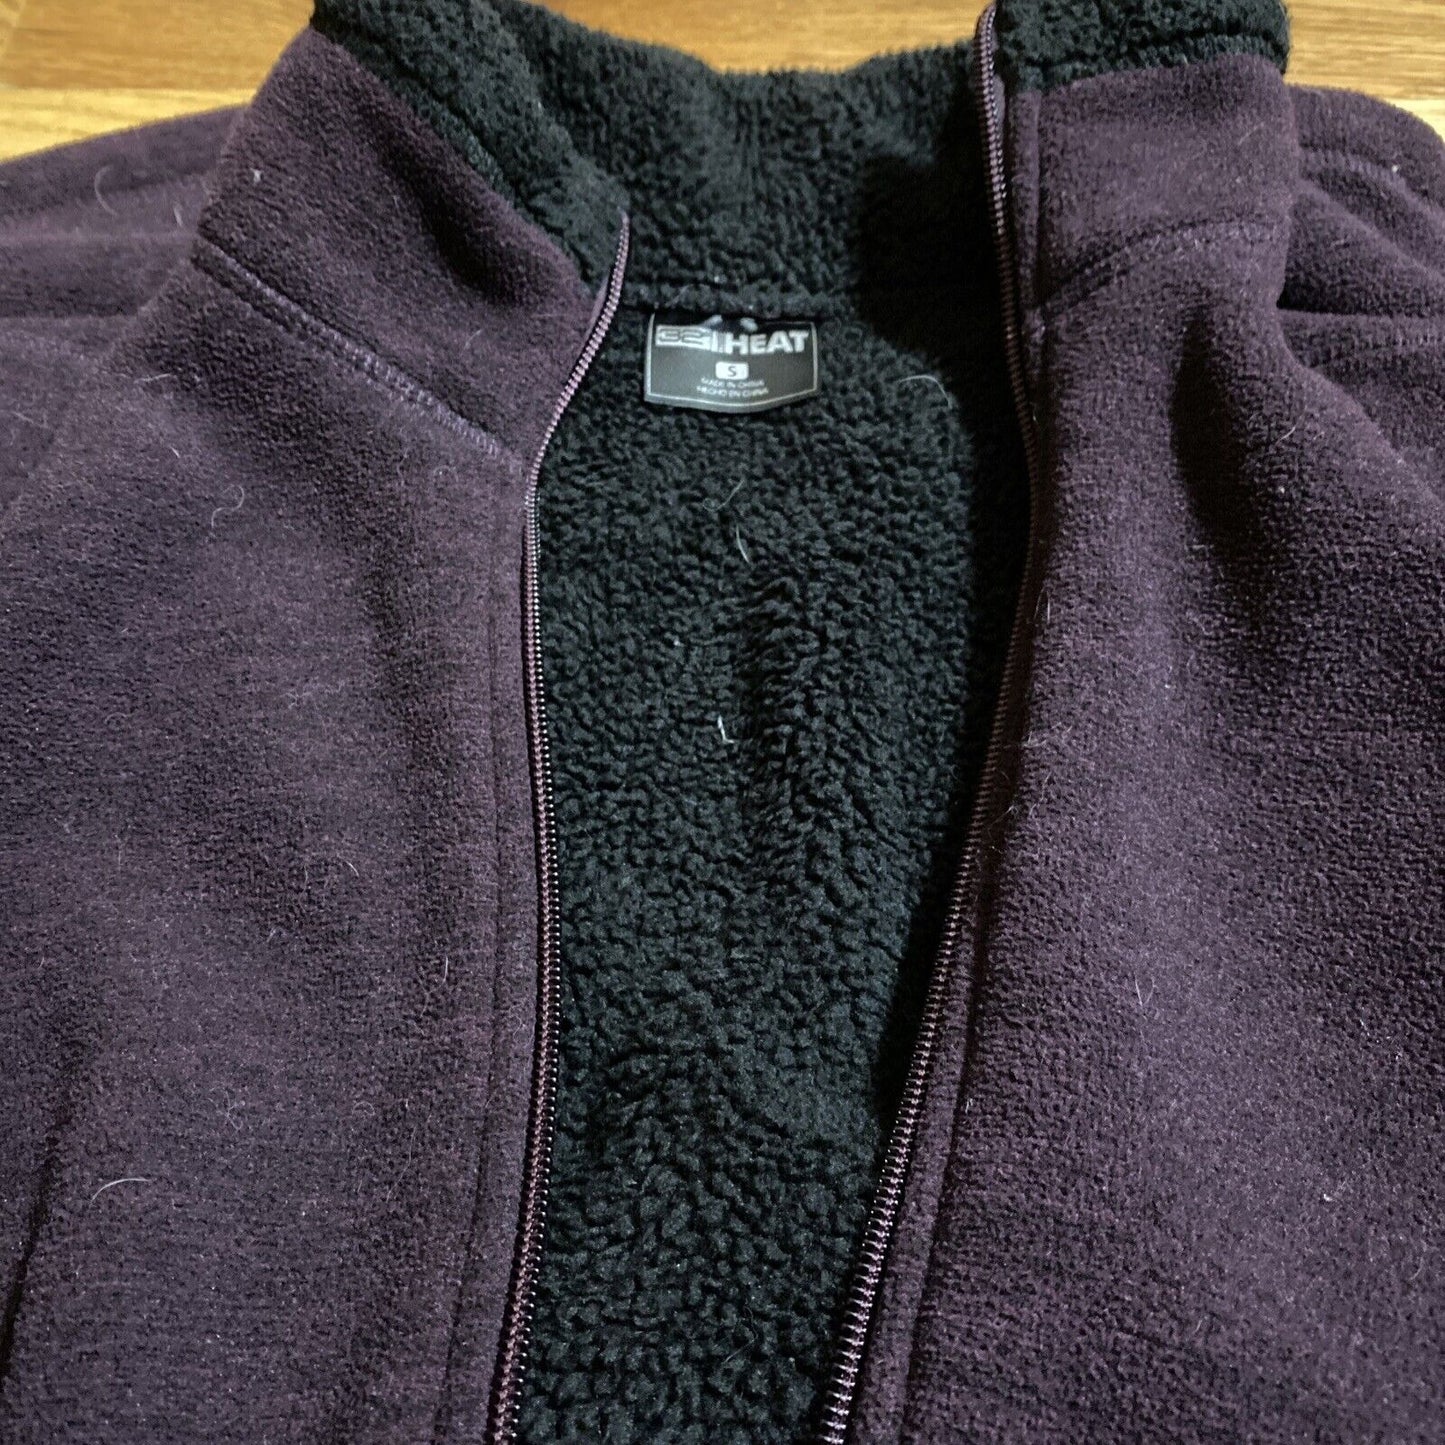 32 Degrees Heat Women’s Small Eggplant Purple Full-zip Polyester Fleece Jacket